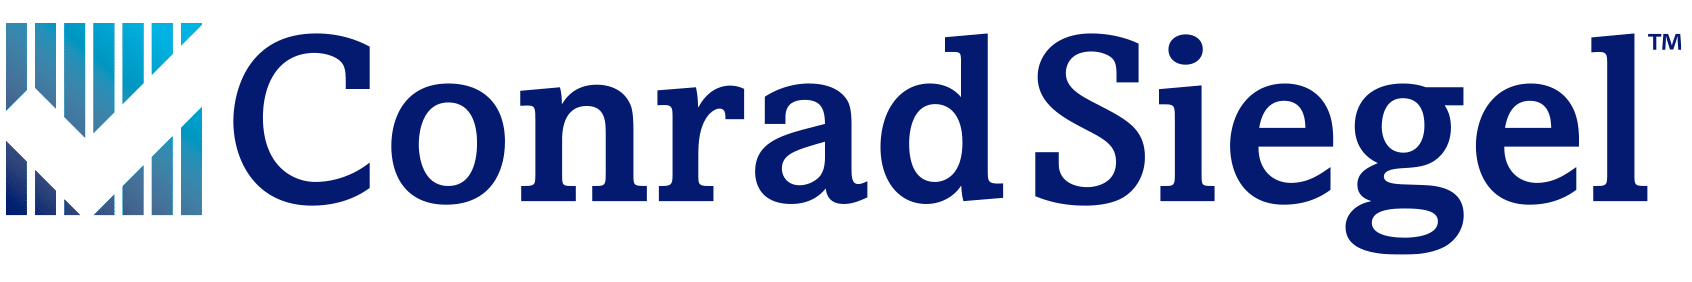 ConradSiegel_logo